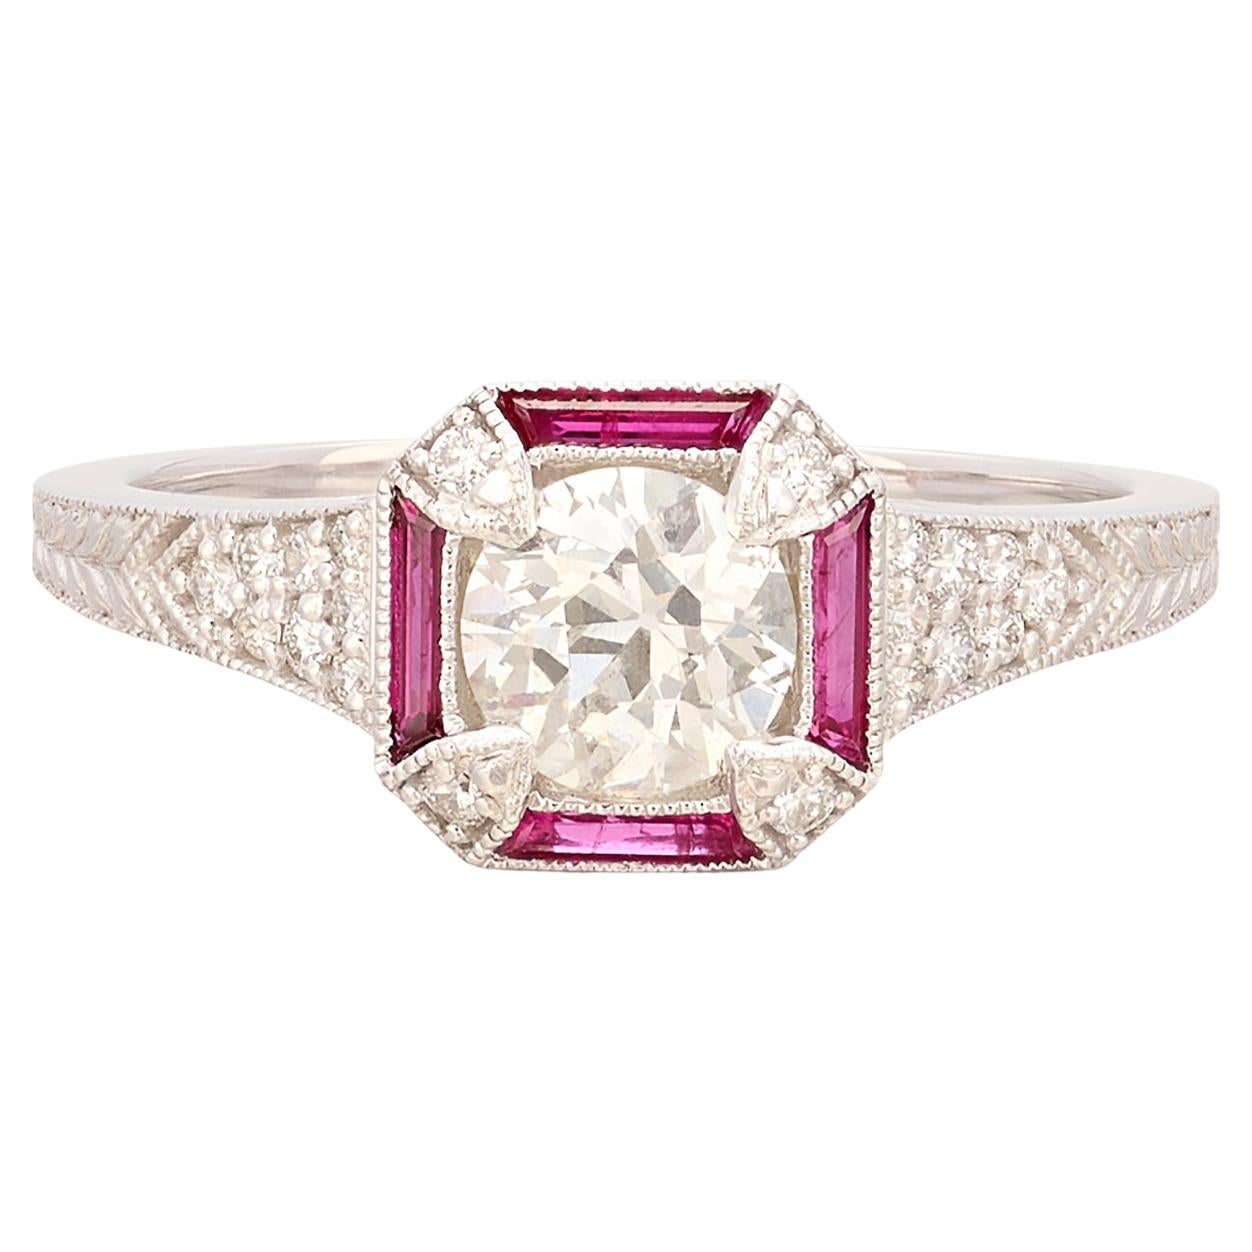 Art Deco Style Diamond & Ruby Engagement Ring